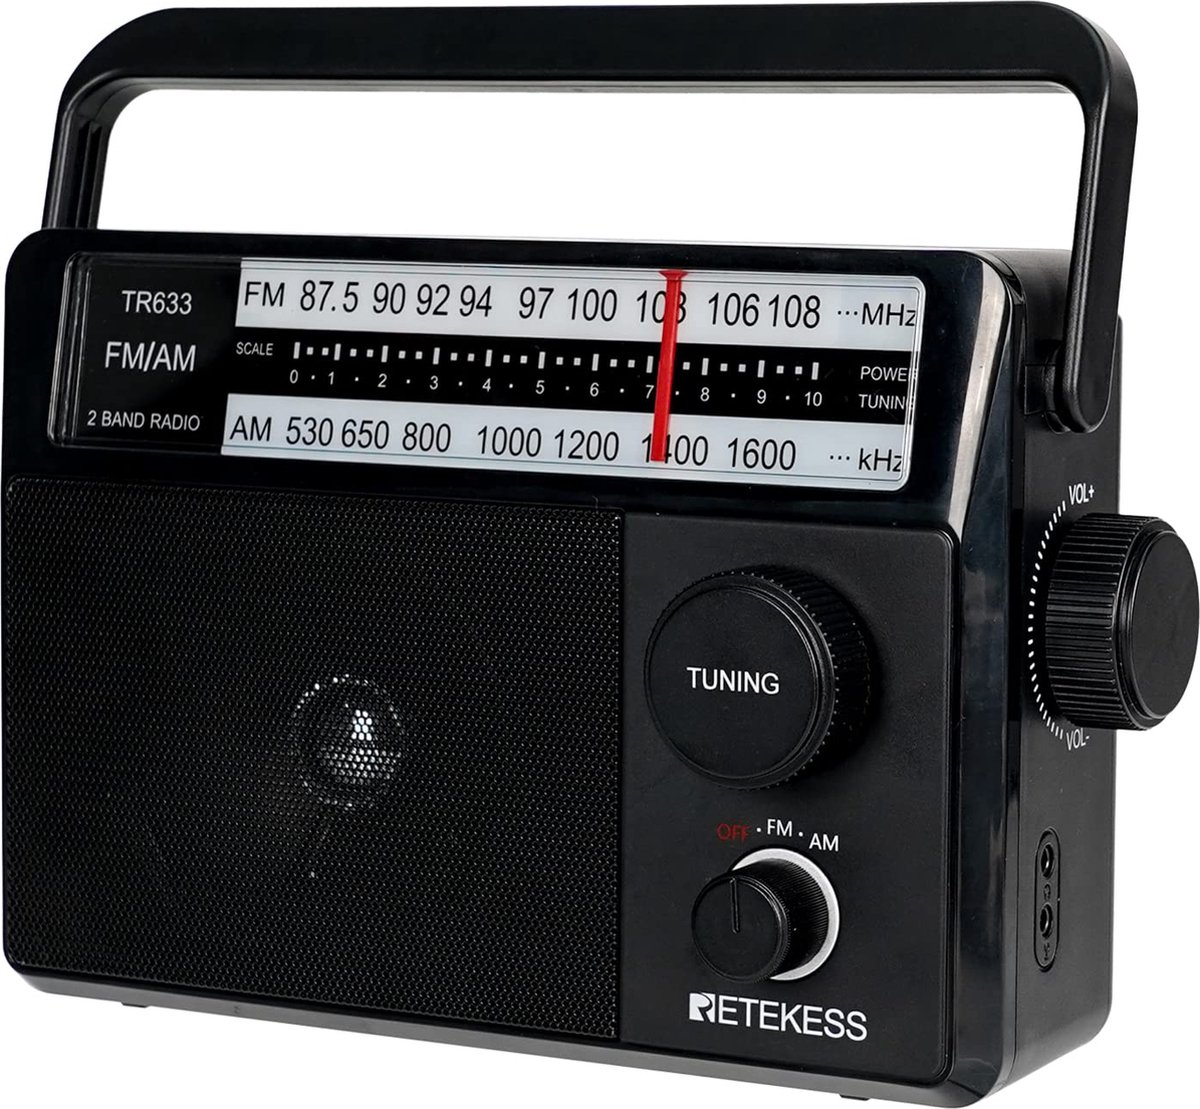 Beroli - Retekess TR633 - Portable Radio - AM FM Radio - Mains and Battery - Transistor - Headphone Jack - Grote luidspreker - Eenvoudig voor ouderen (zwart)